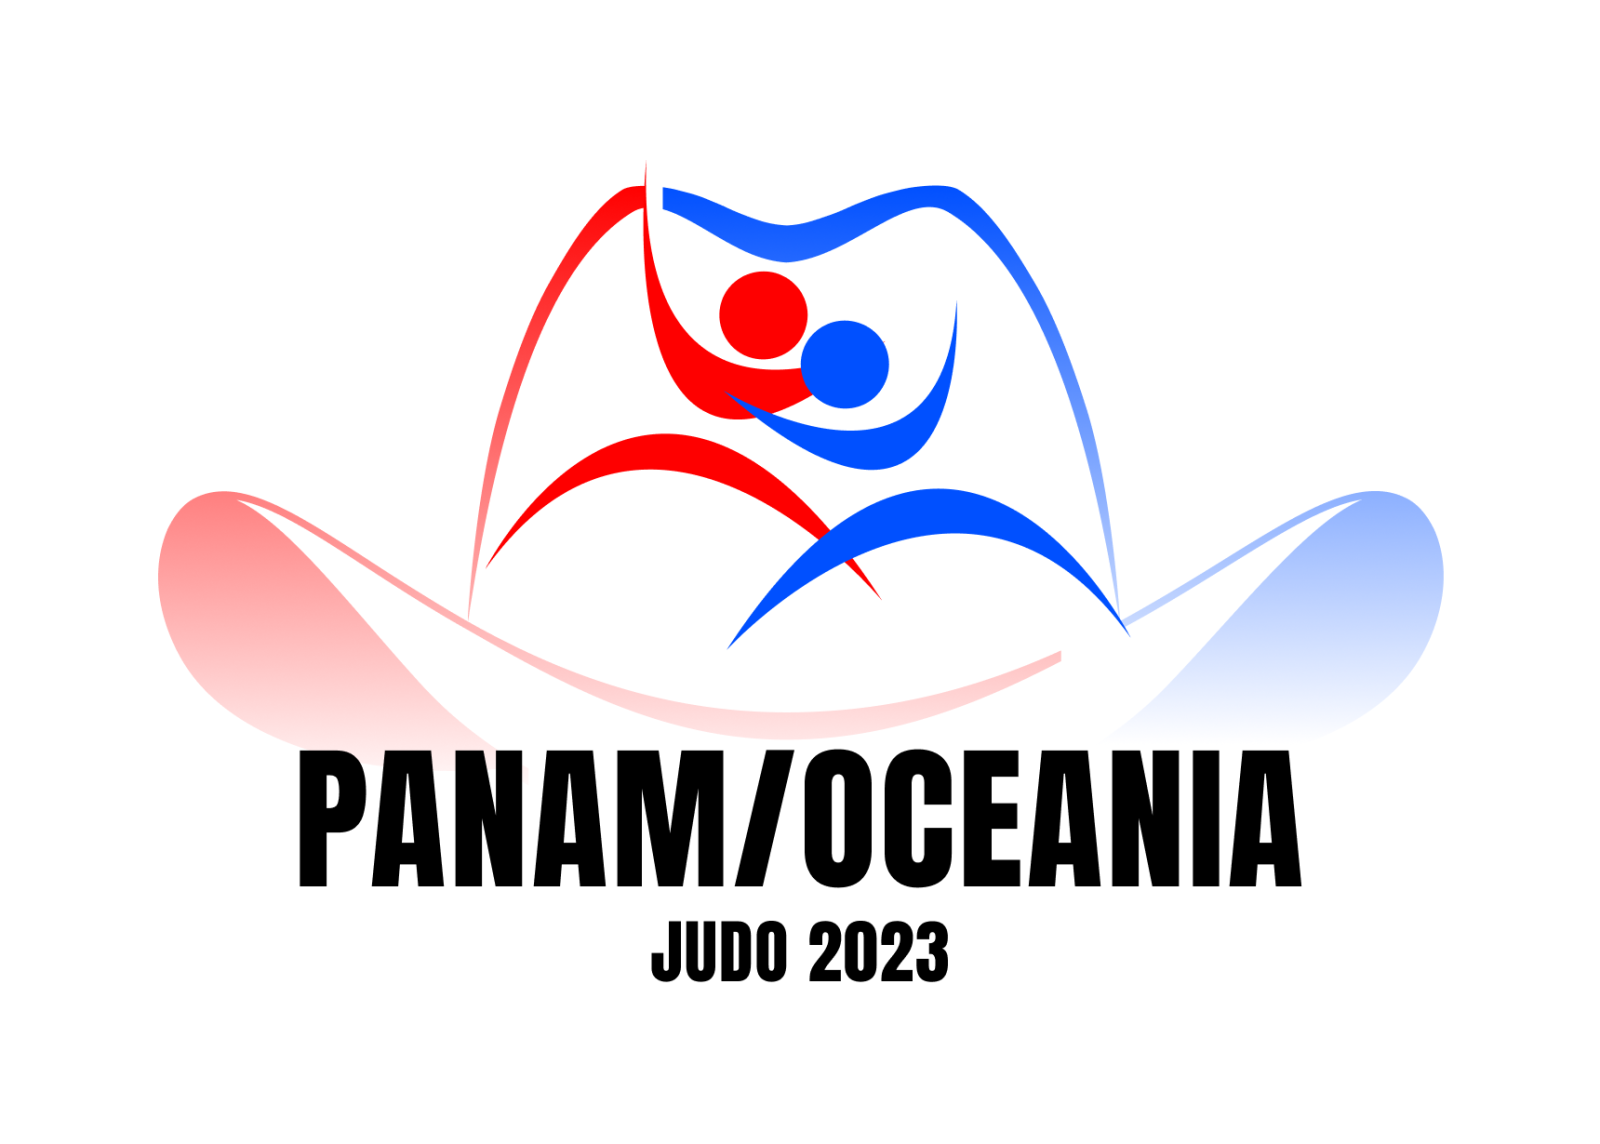 JudoCanada PanamOceania2023